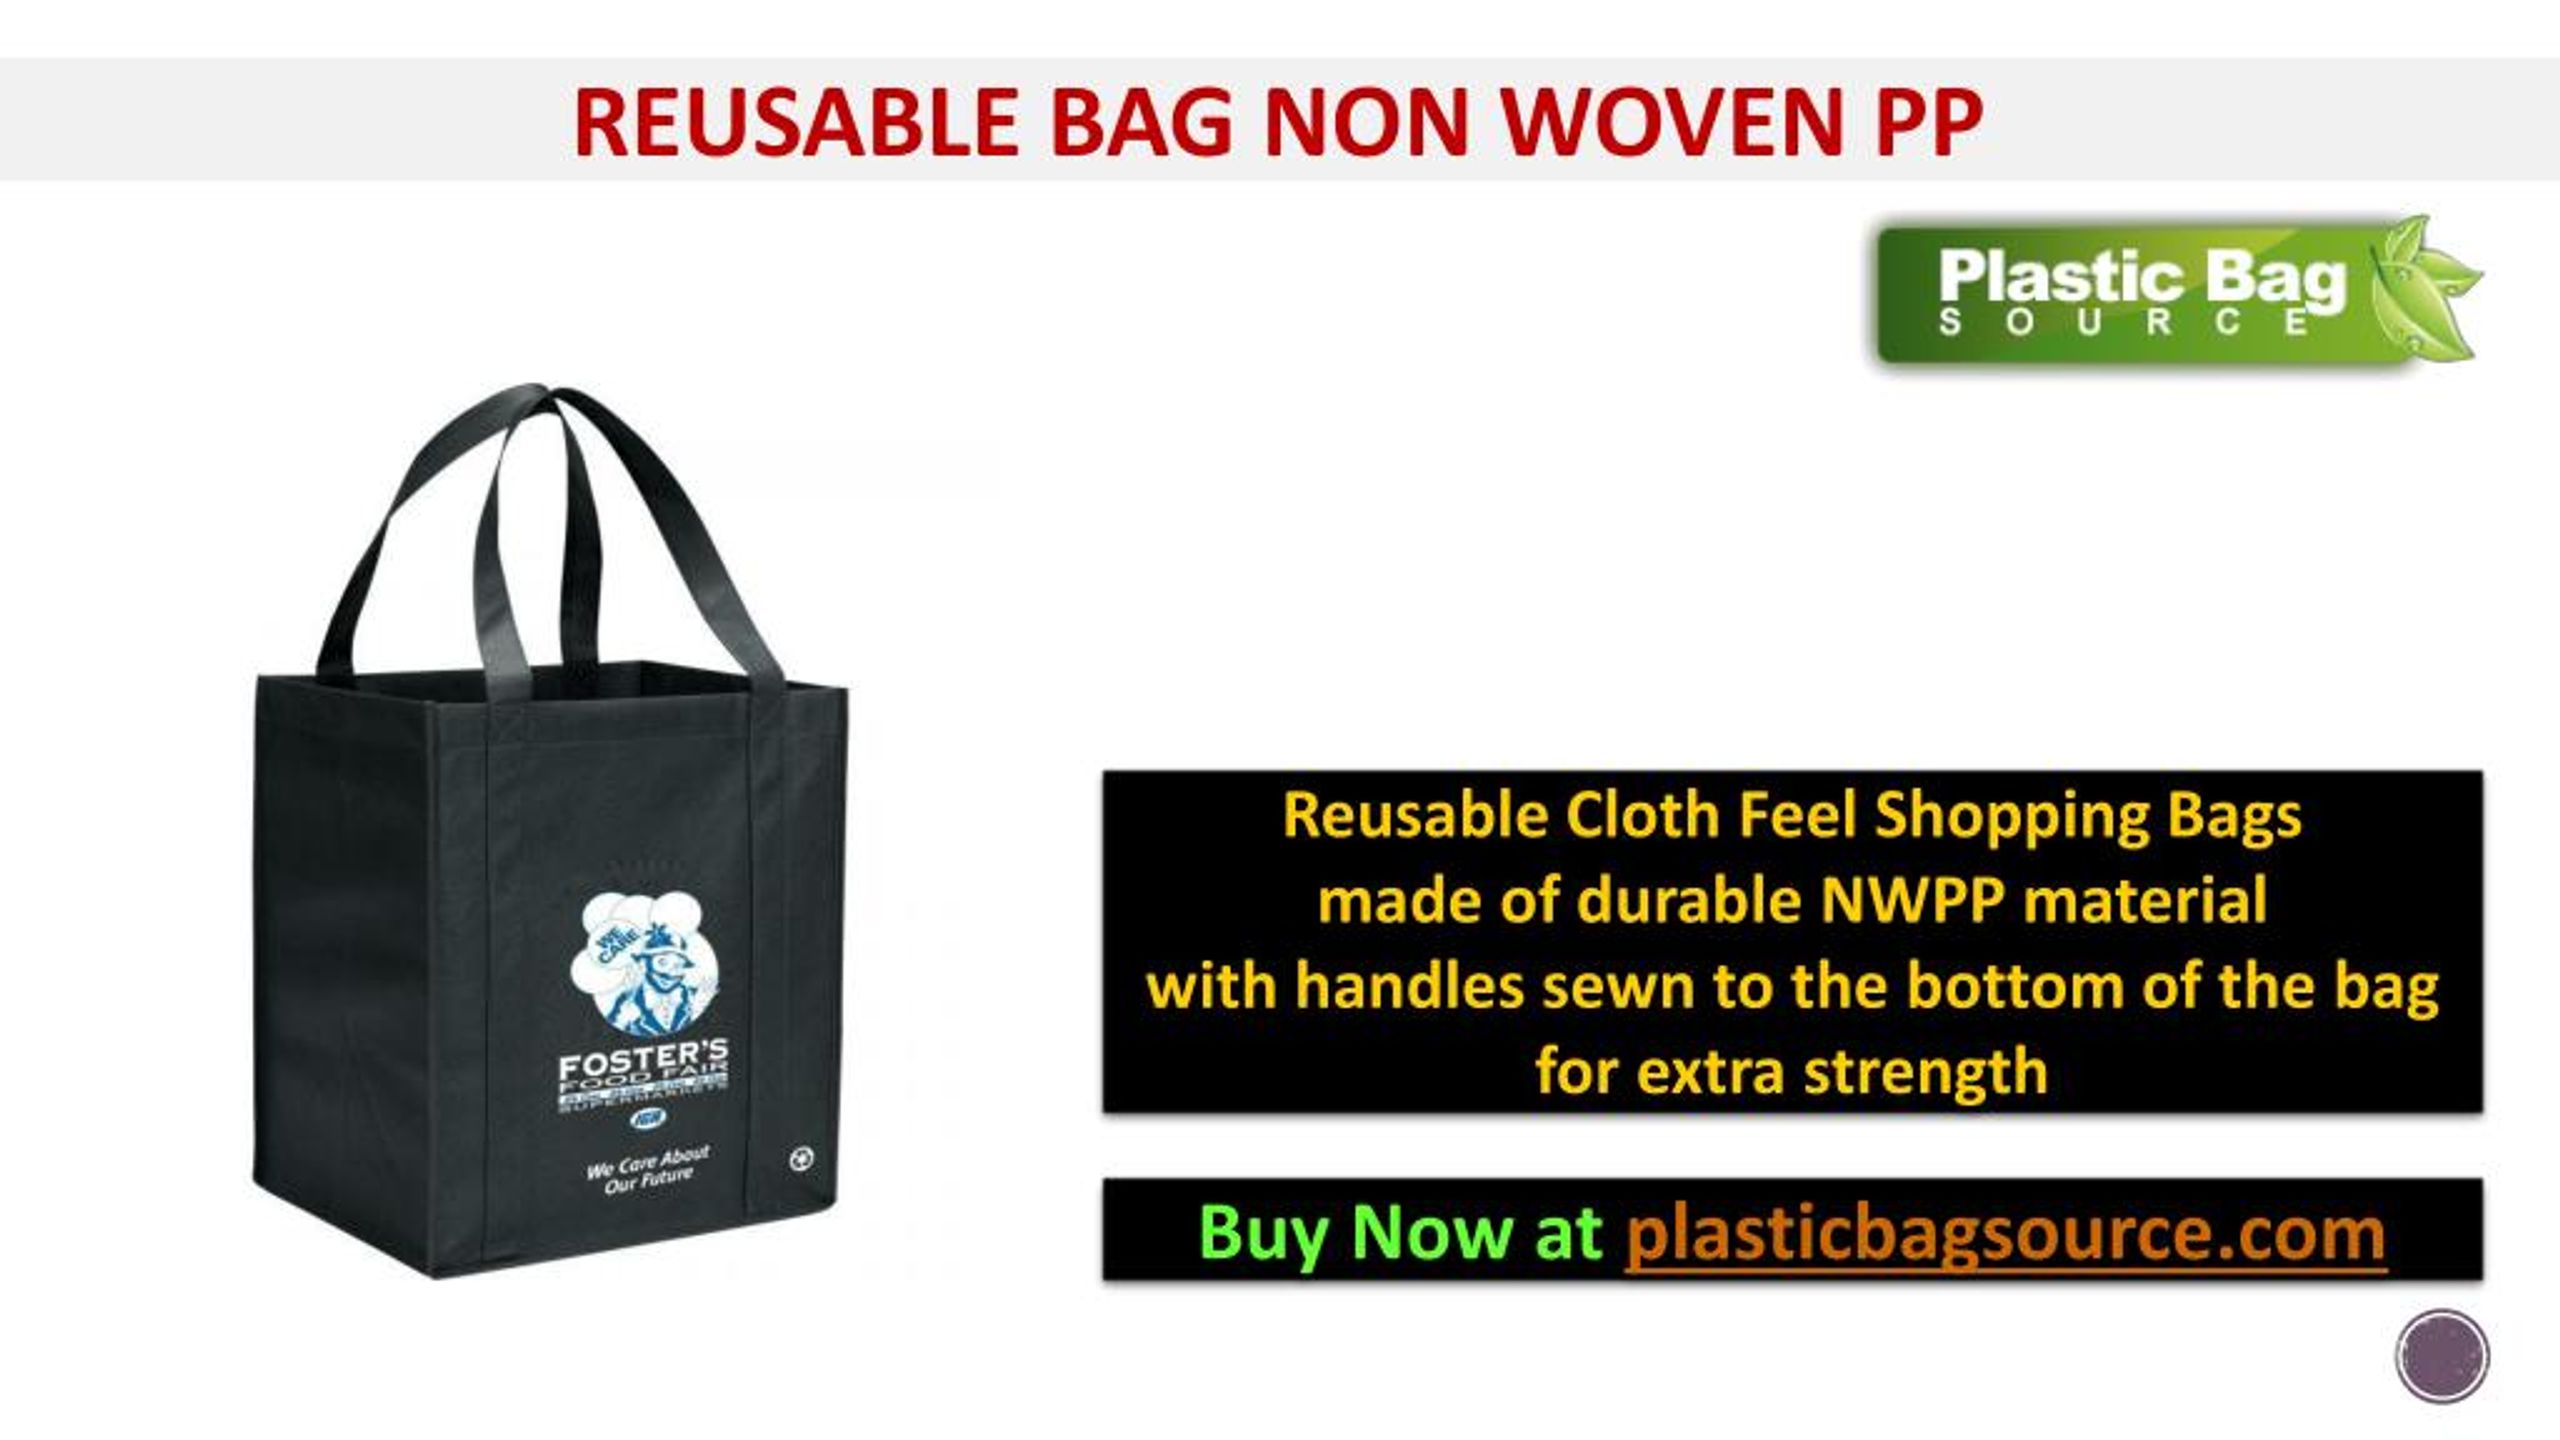 New Reusable Bag Range: Heat-Sealed Non-woven PP Bags | Blog